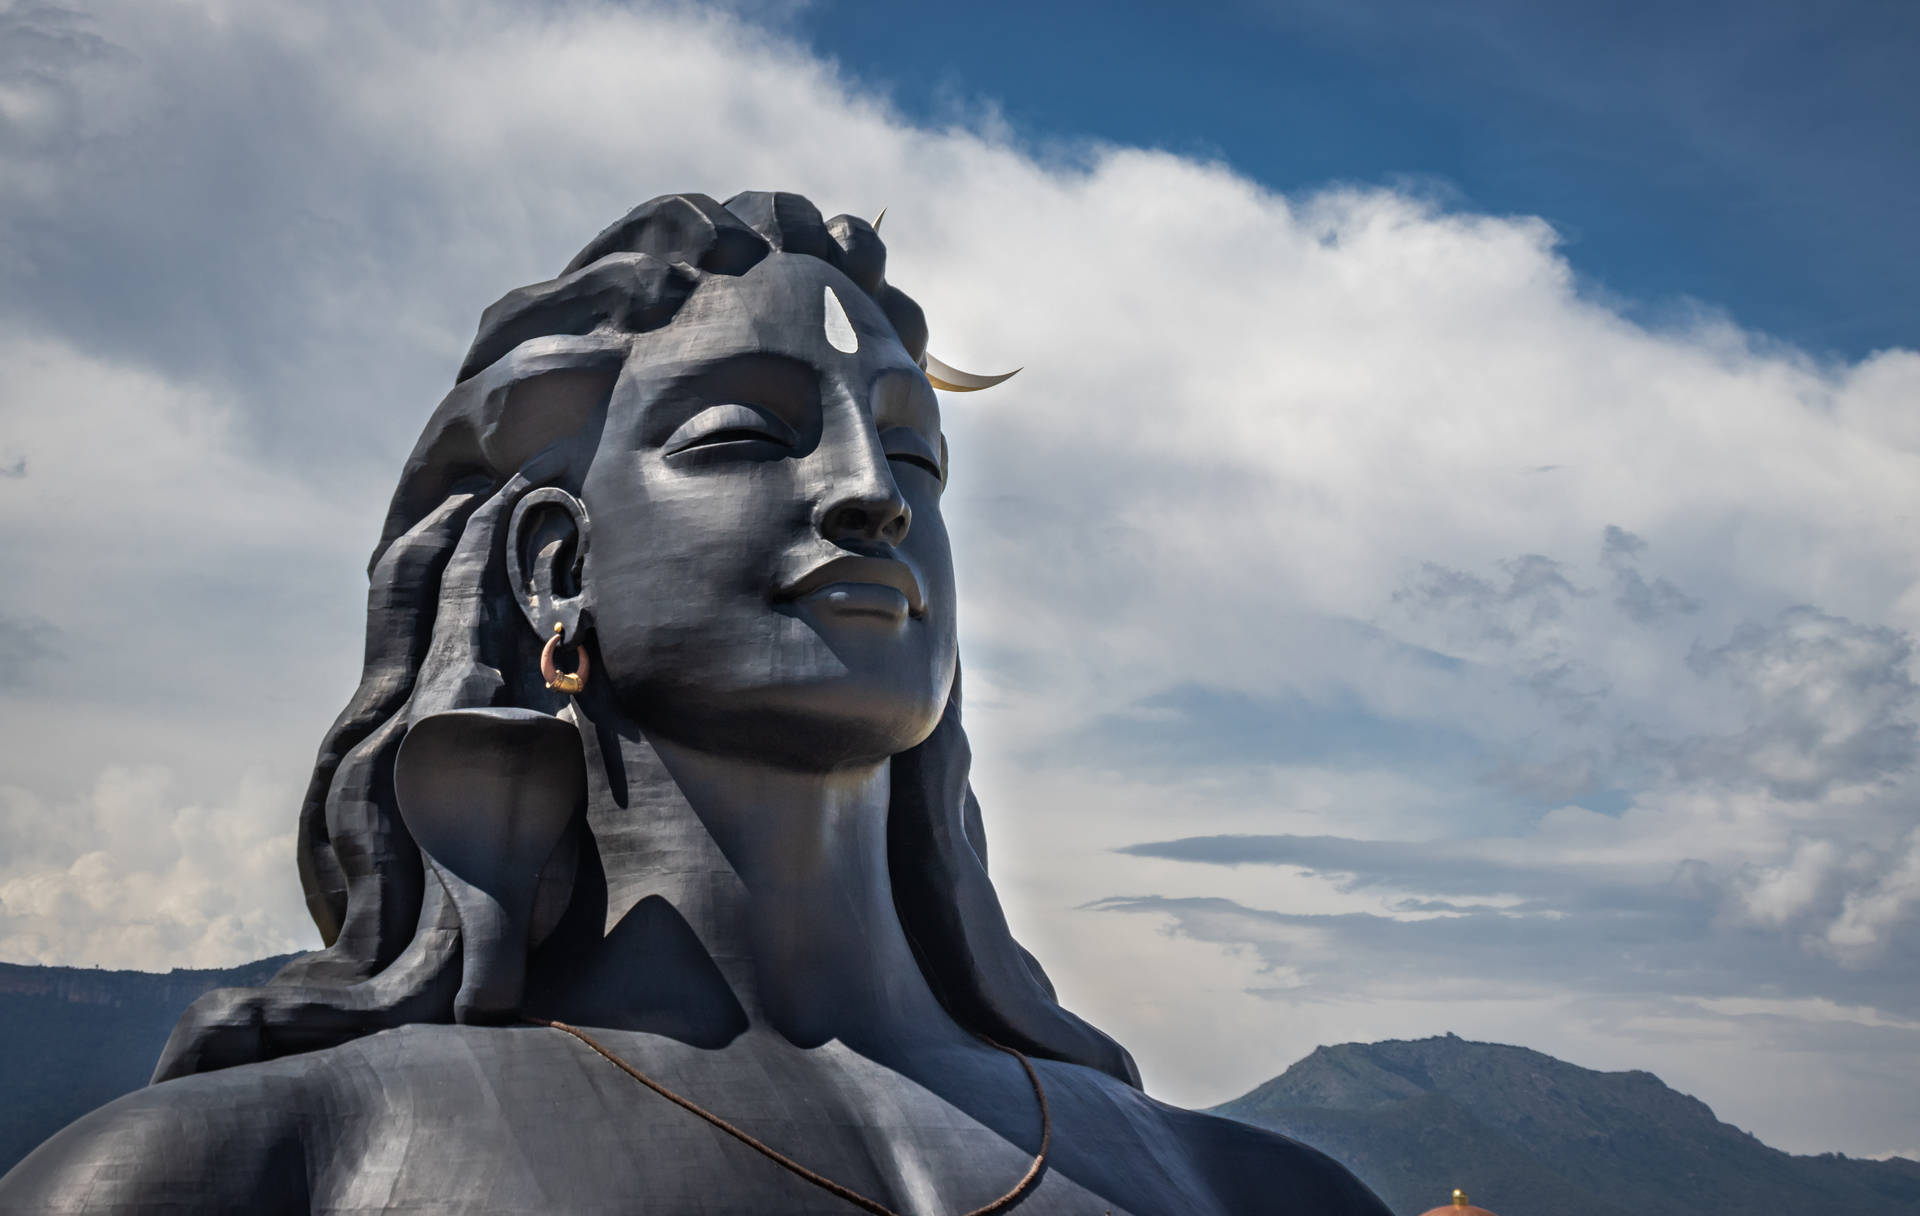 Download Adiyogi Shiva Statue At Coimbatore, India Wallpaper | Wallpapers .com